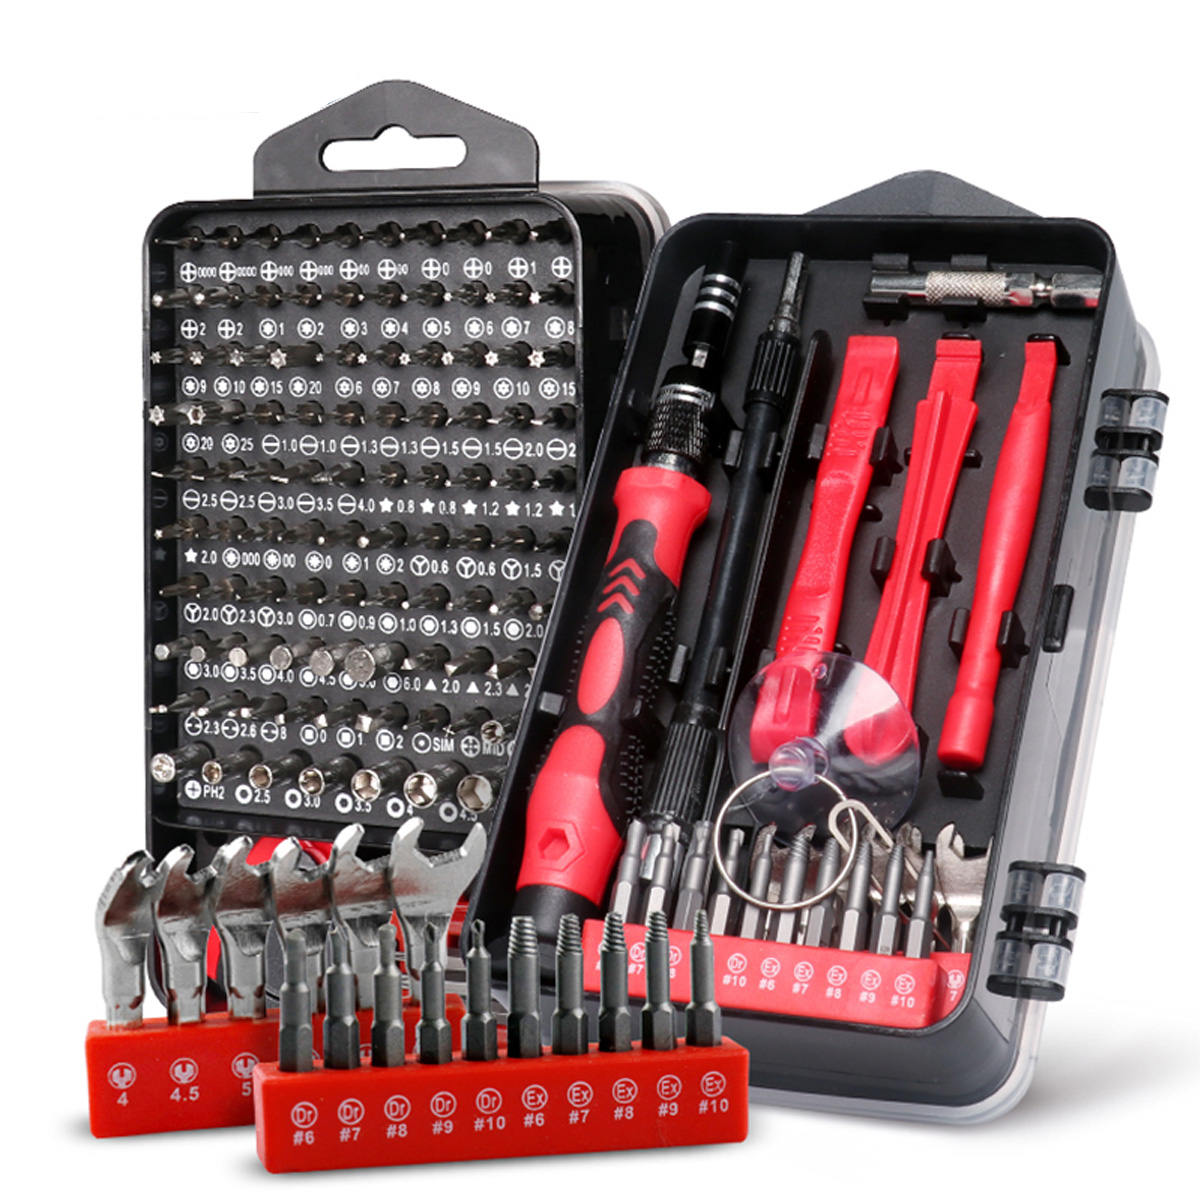 138 in 1 Screwdriver Set Multifunction Magnetic DIY Screw Driver Household Repair Tool W/ Tweezer - Red Colour